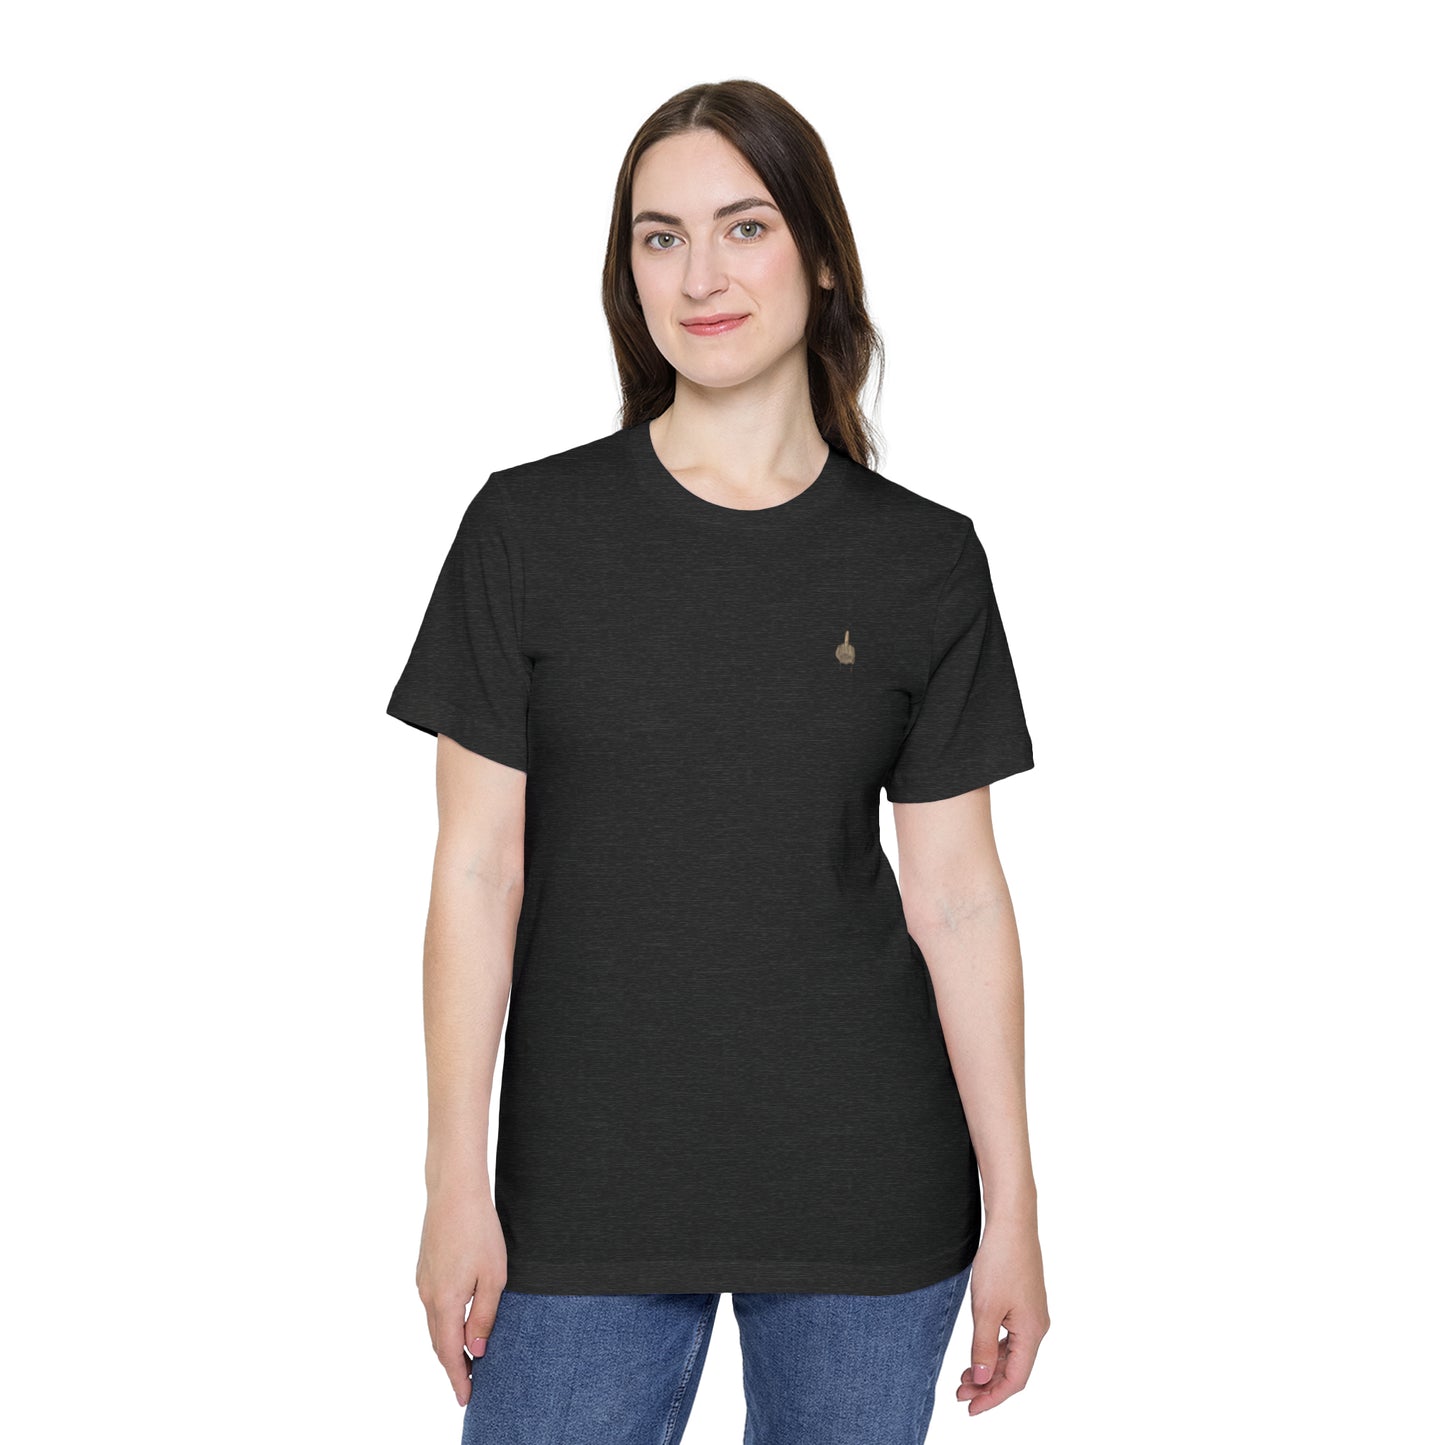 Middle Finger T-shirt, Middle Finger Tee USA-Made Unisex Short-Sleeve Jersey T-Shirt